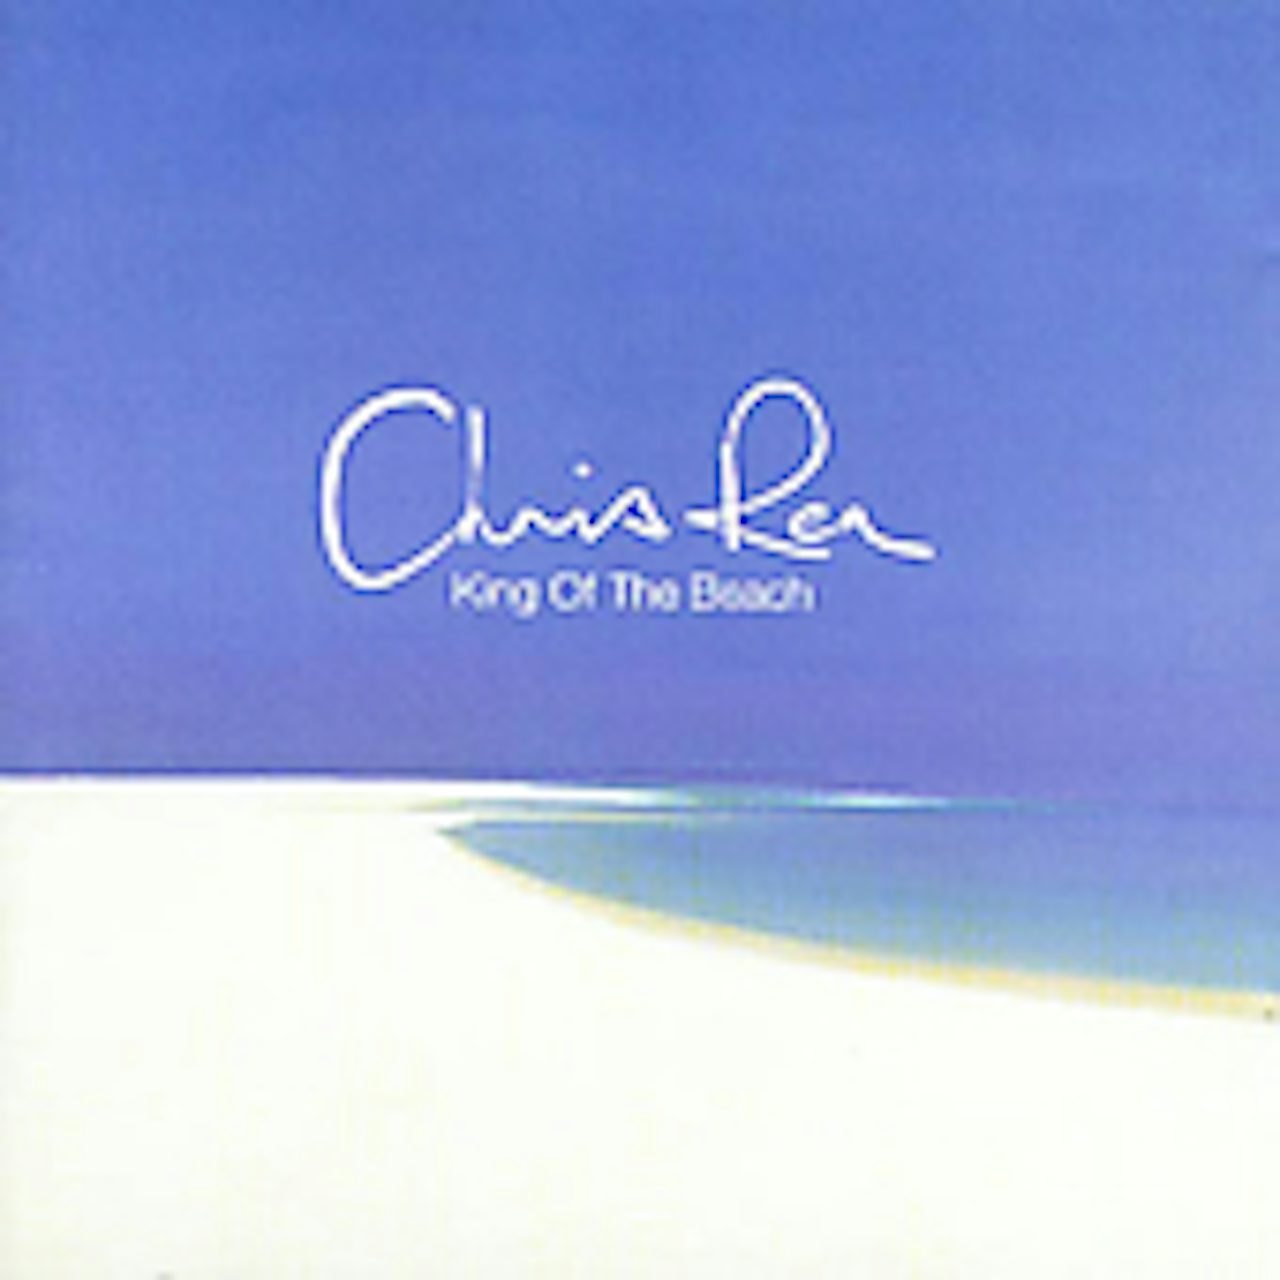 Chris Rea KING OF BEACH CD